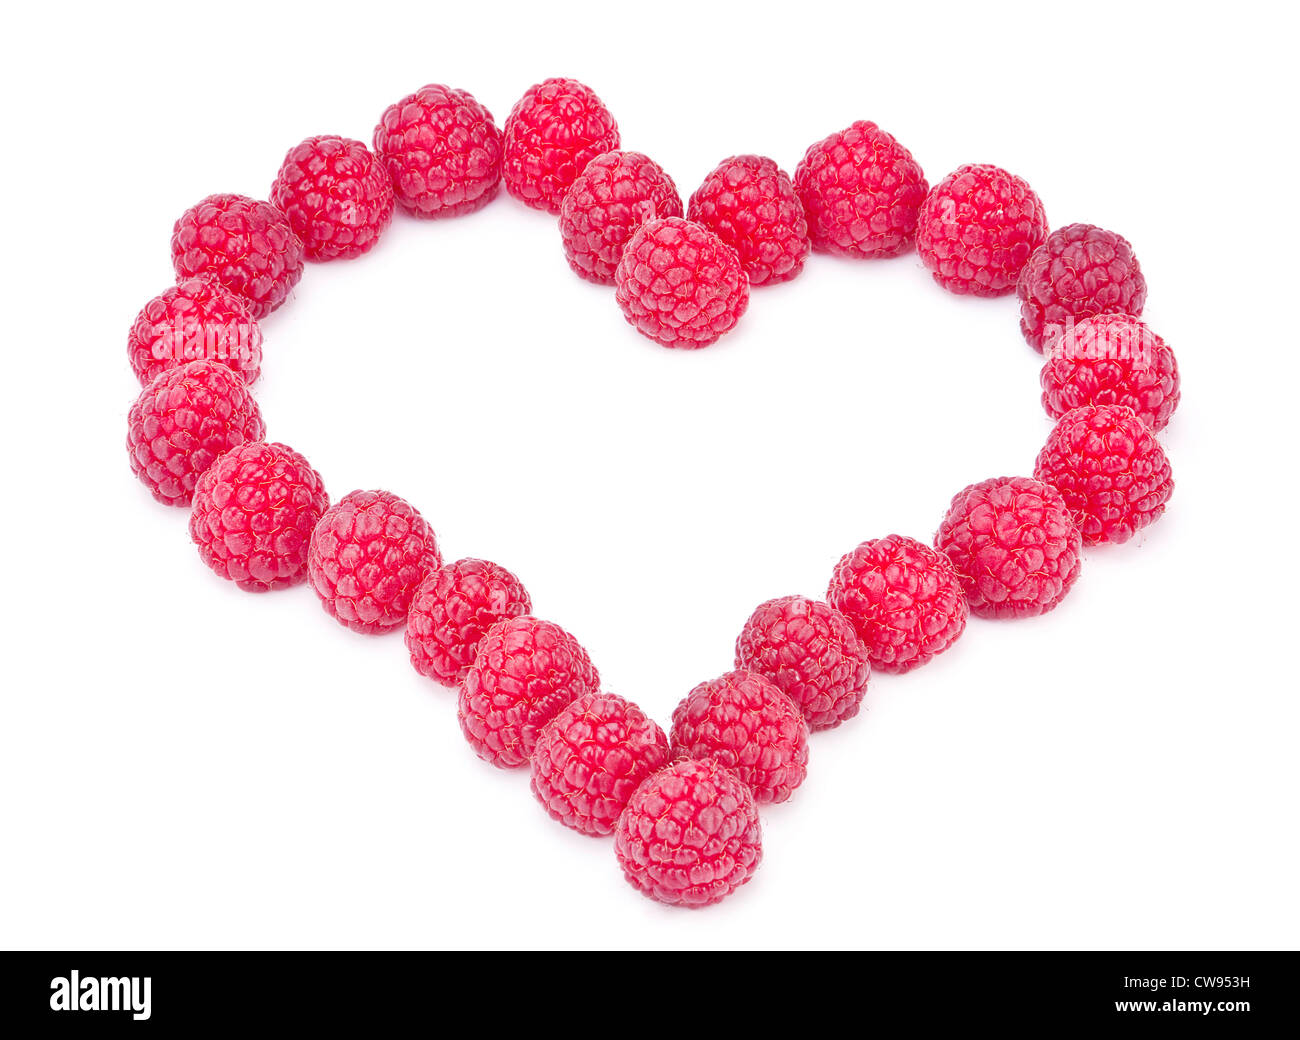 Raspberry shape as heart on white Stock Photo